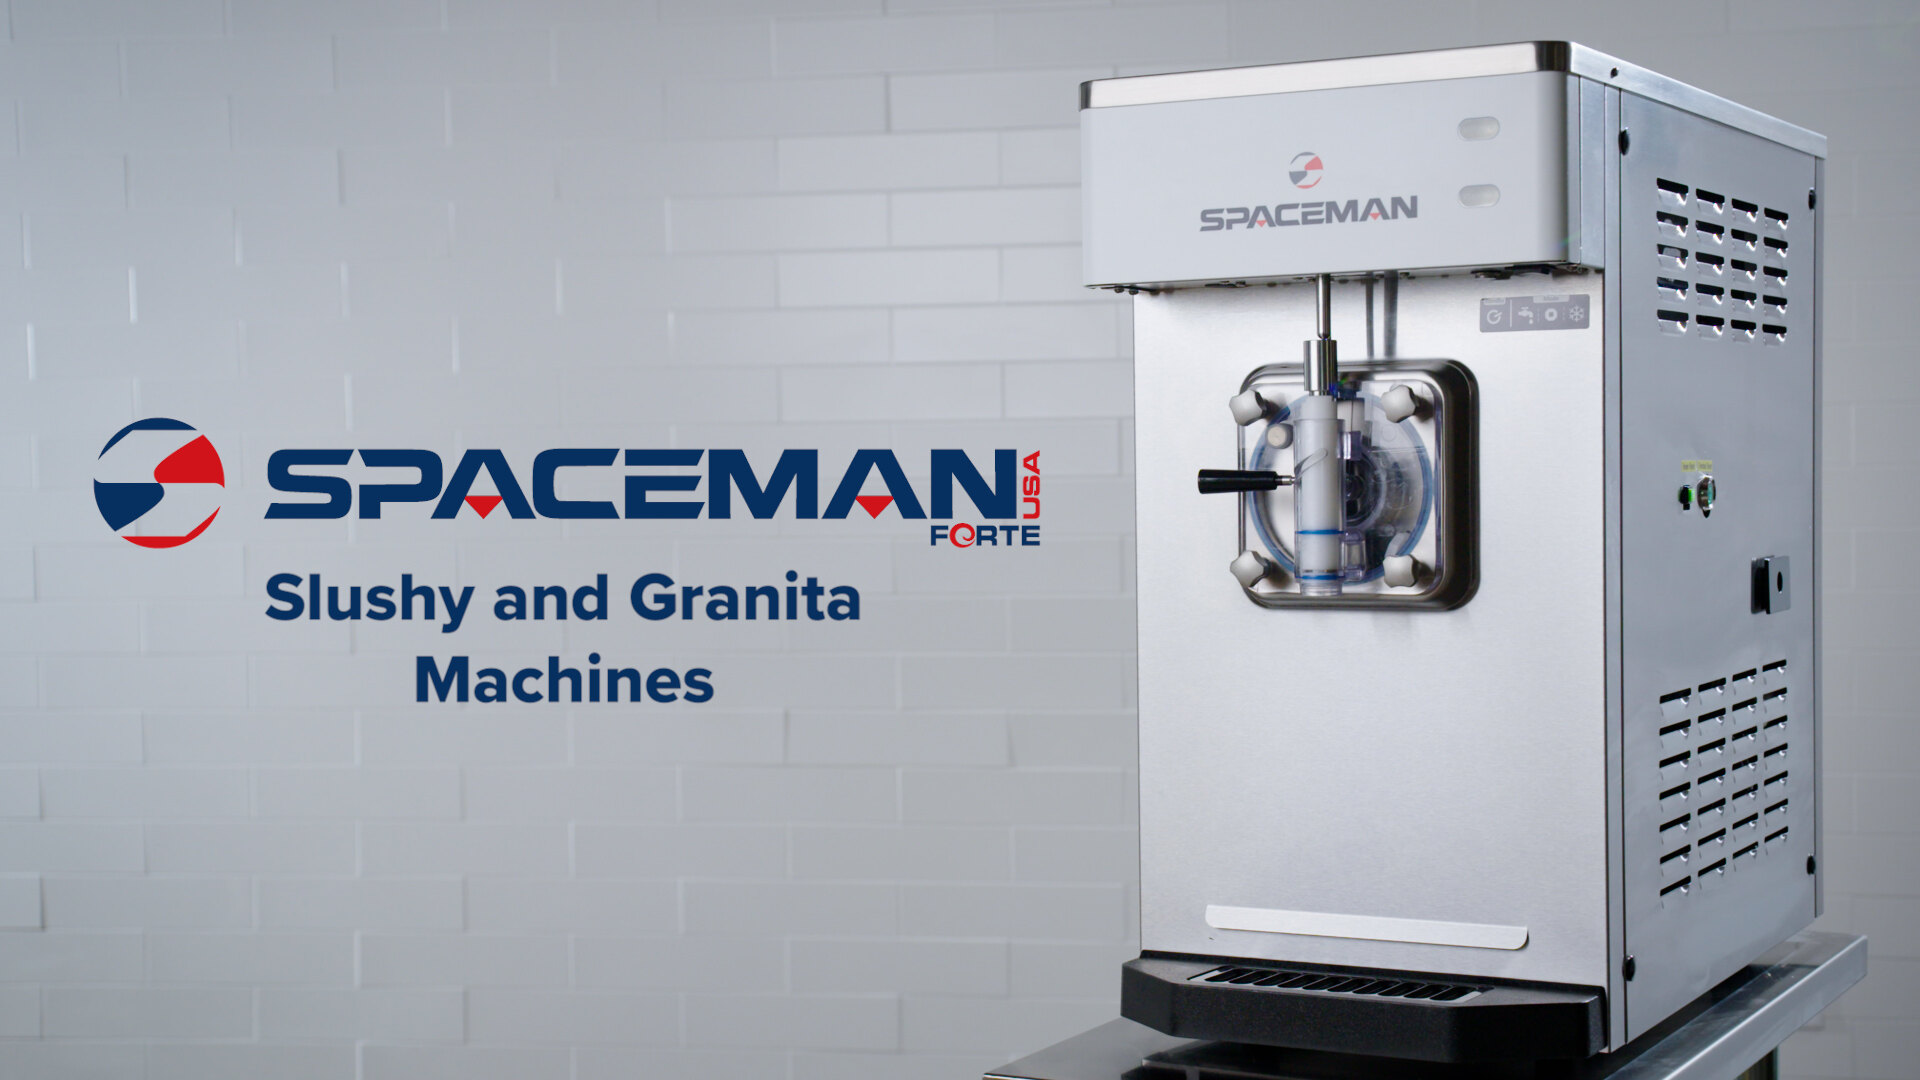 Commercial Frozen Yogurt Machine - Spaceman Forte